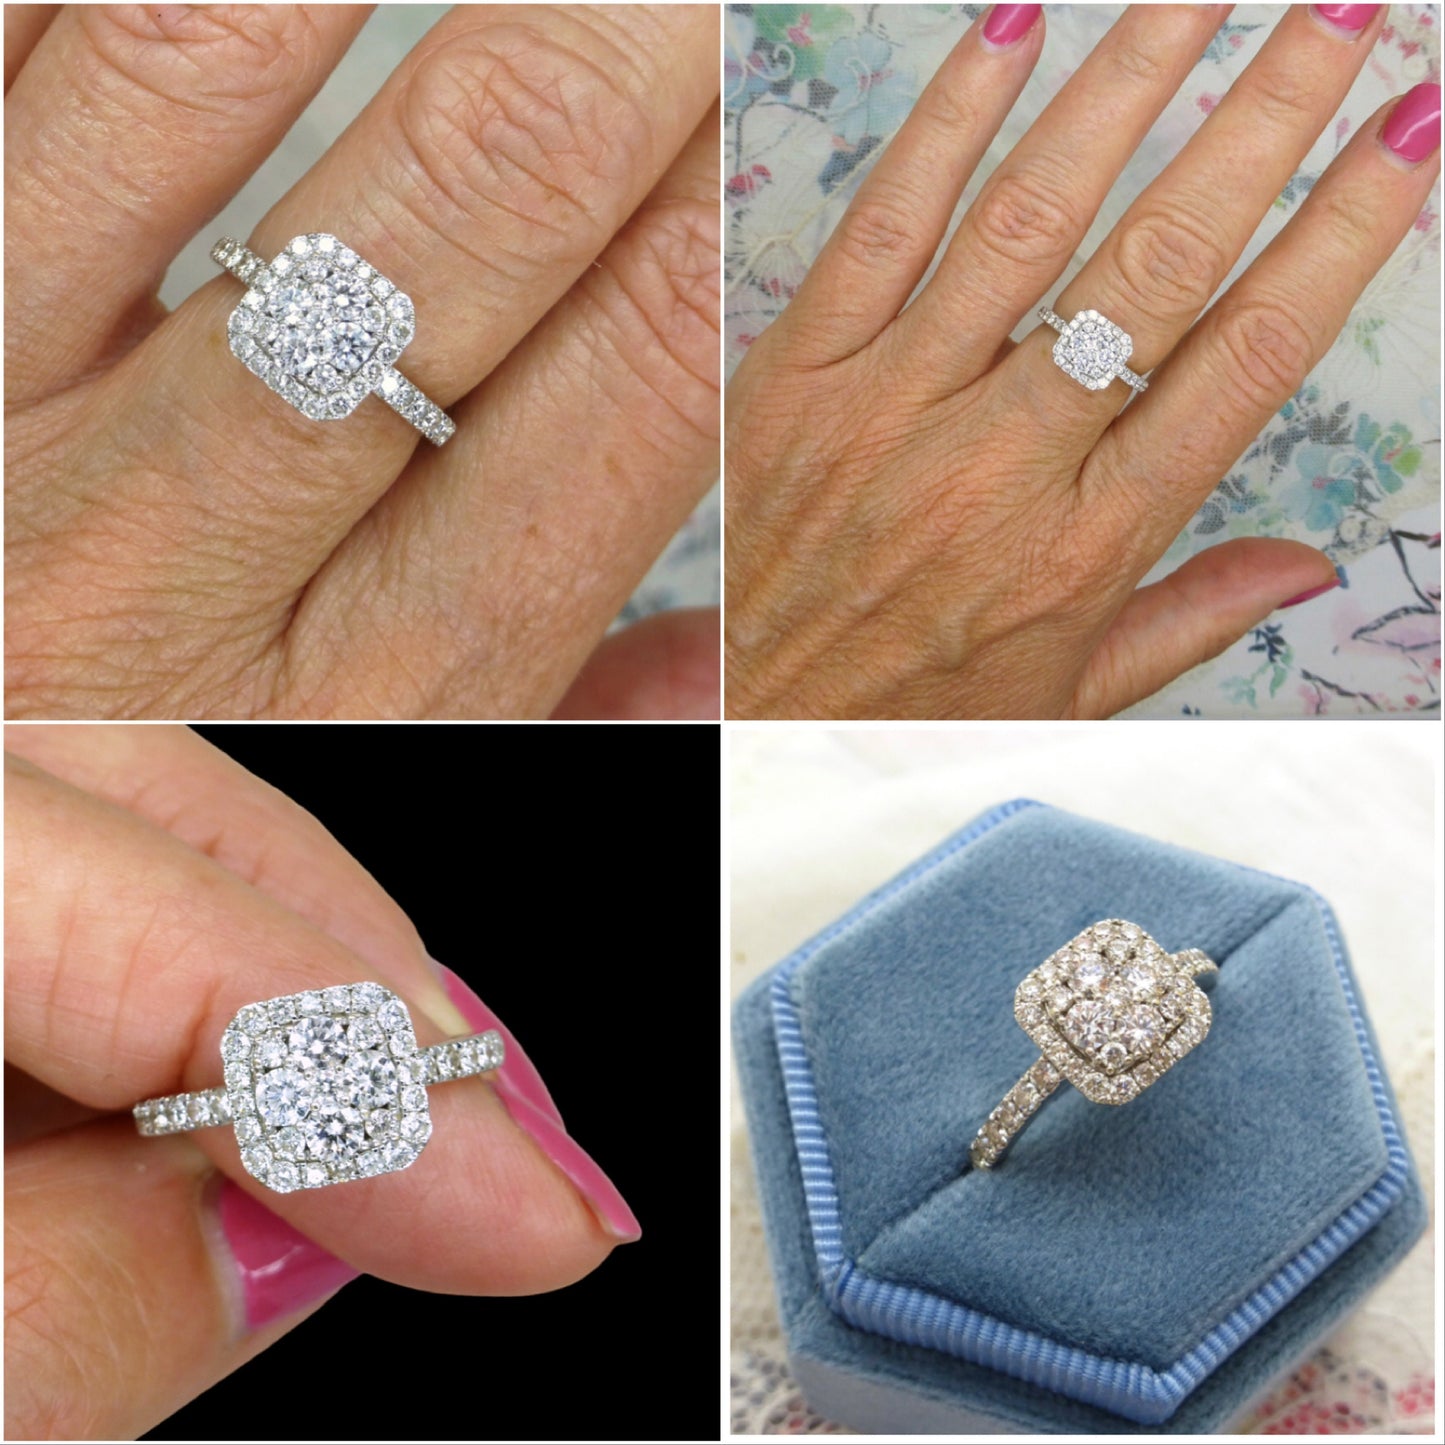 Vintage 18ct white gold diamond cluster engagement ring